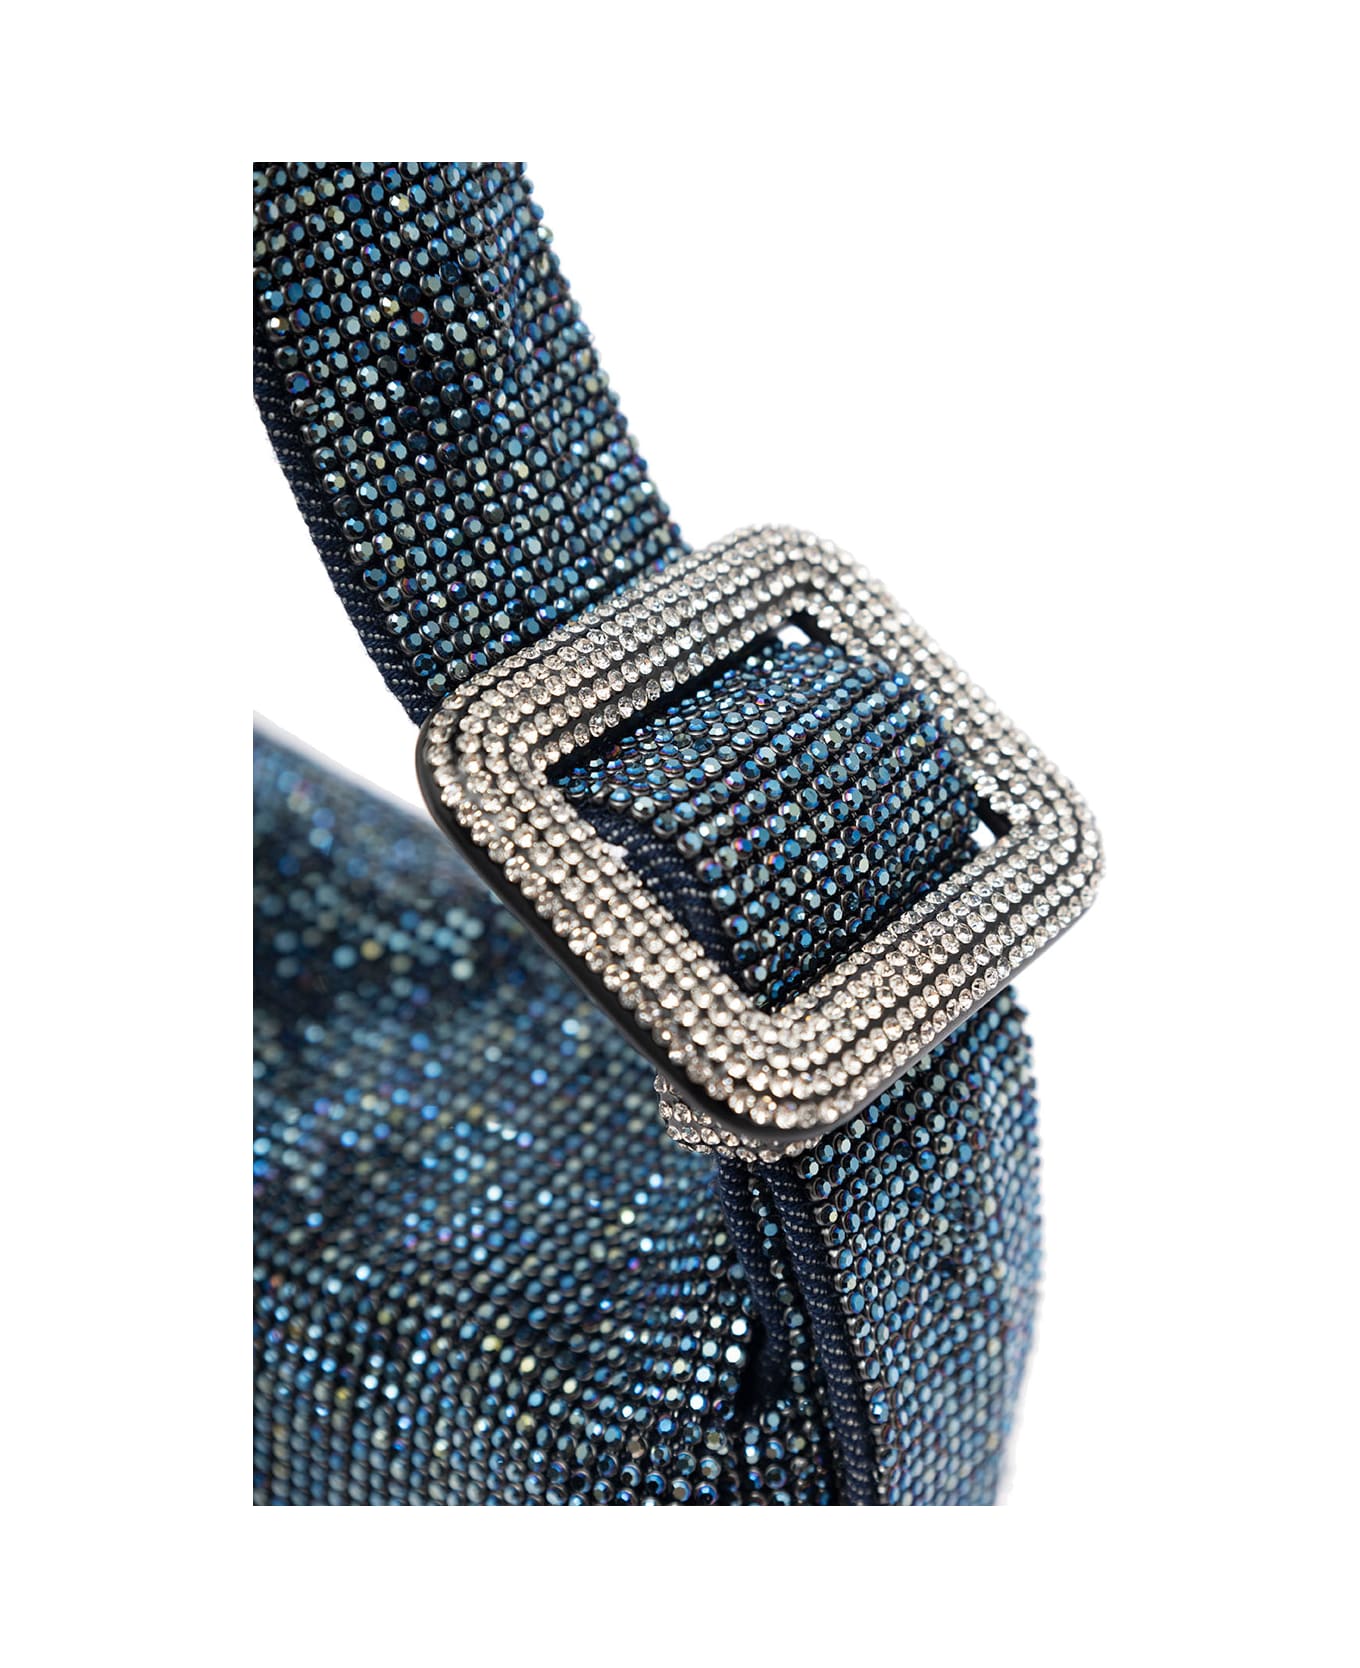 Benedetta Bruzziches 'vitty La Grande' Blue Shoulder Bag With Gem Embellishment In Rhinestone Mesh Woman - Blu ショルダーバッグ